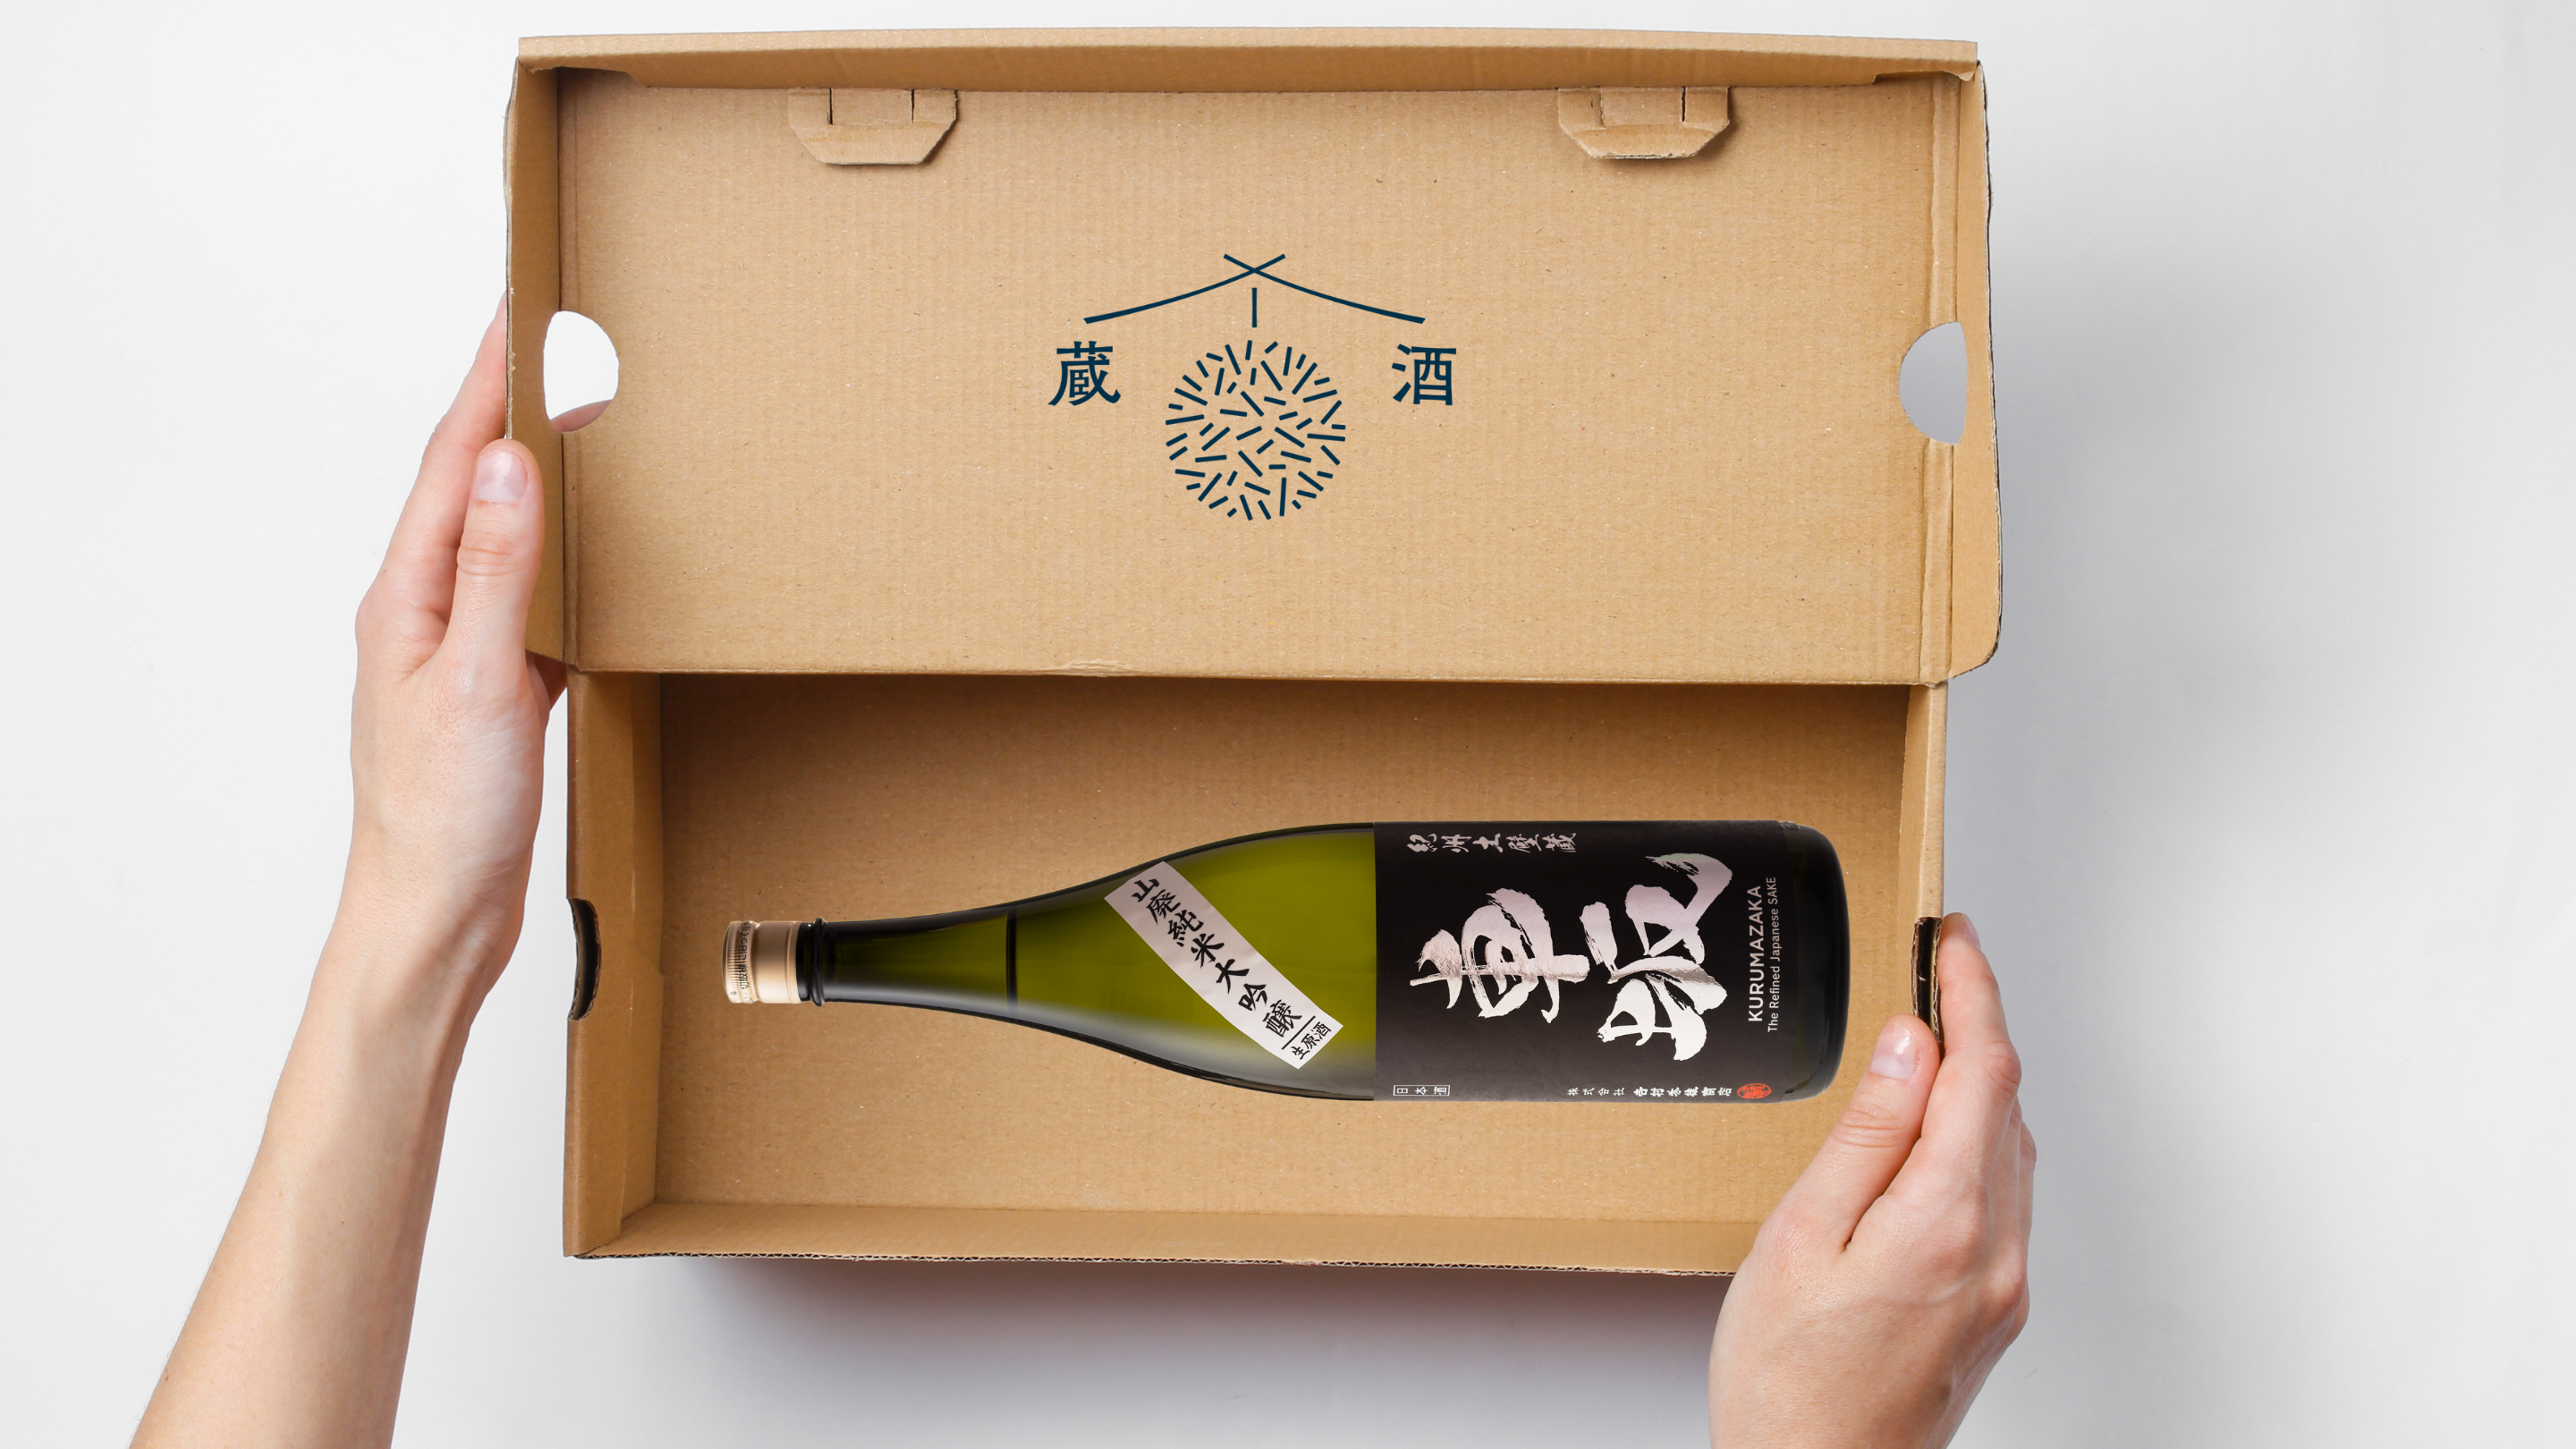 Kurashu shipping box with sake bottle soon launching cross-border sales to various countries